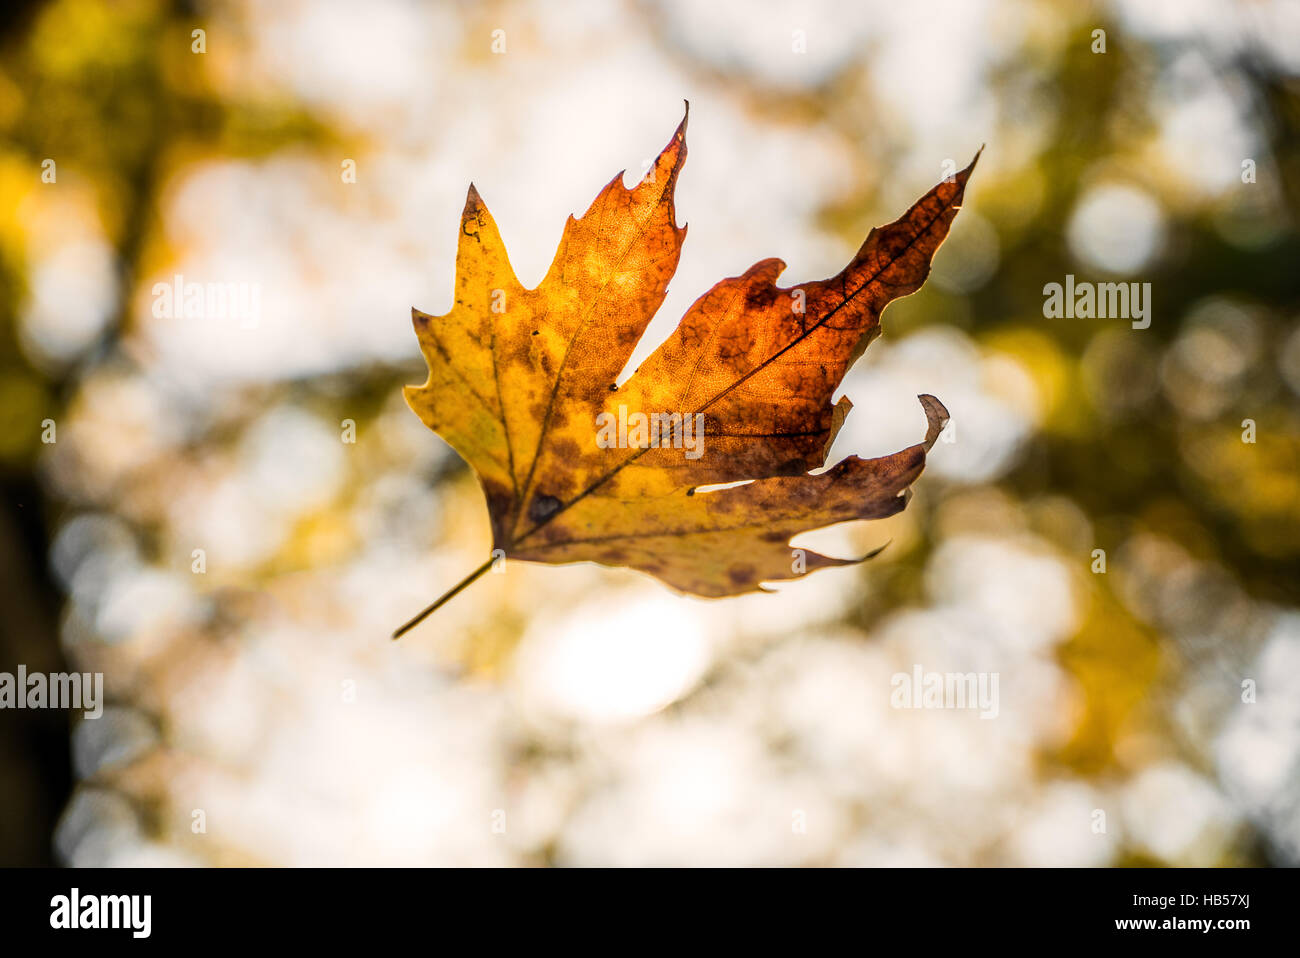 Leaf Falling from Tree captured on camera... Αutumn Background Stock Photo